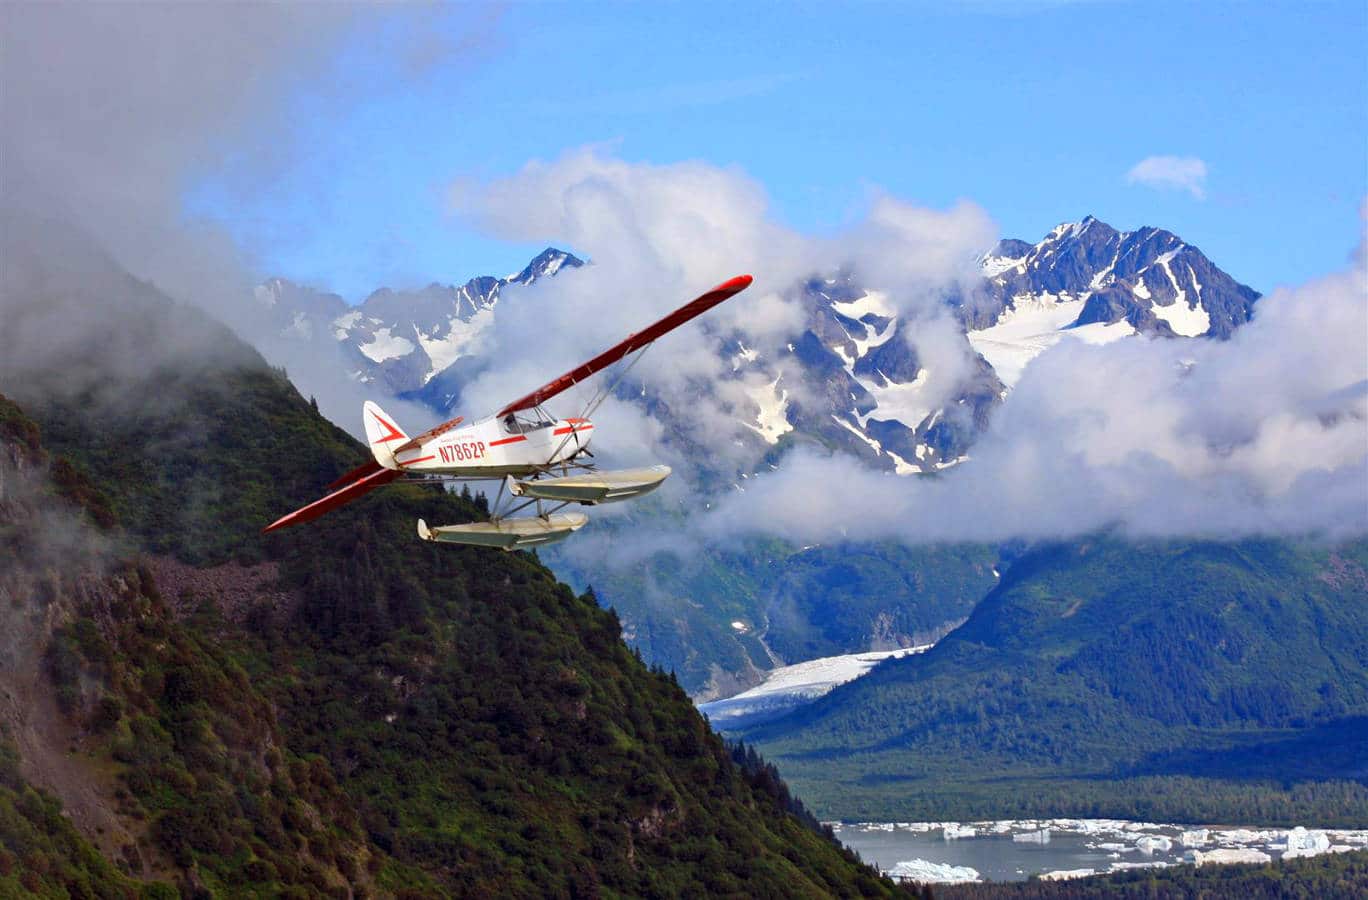 A seaplane flying above the rugged Alaskan terrain.